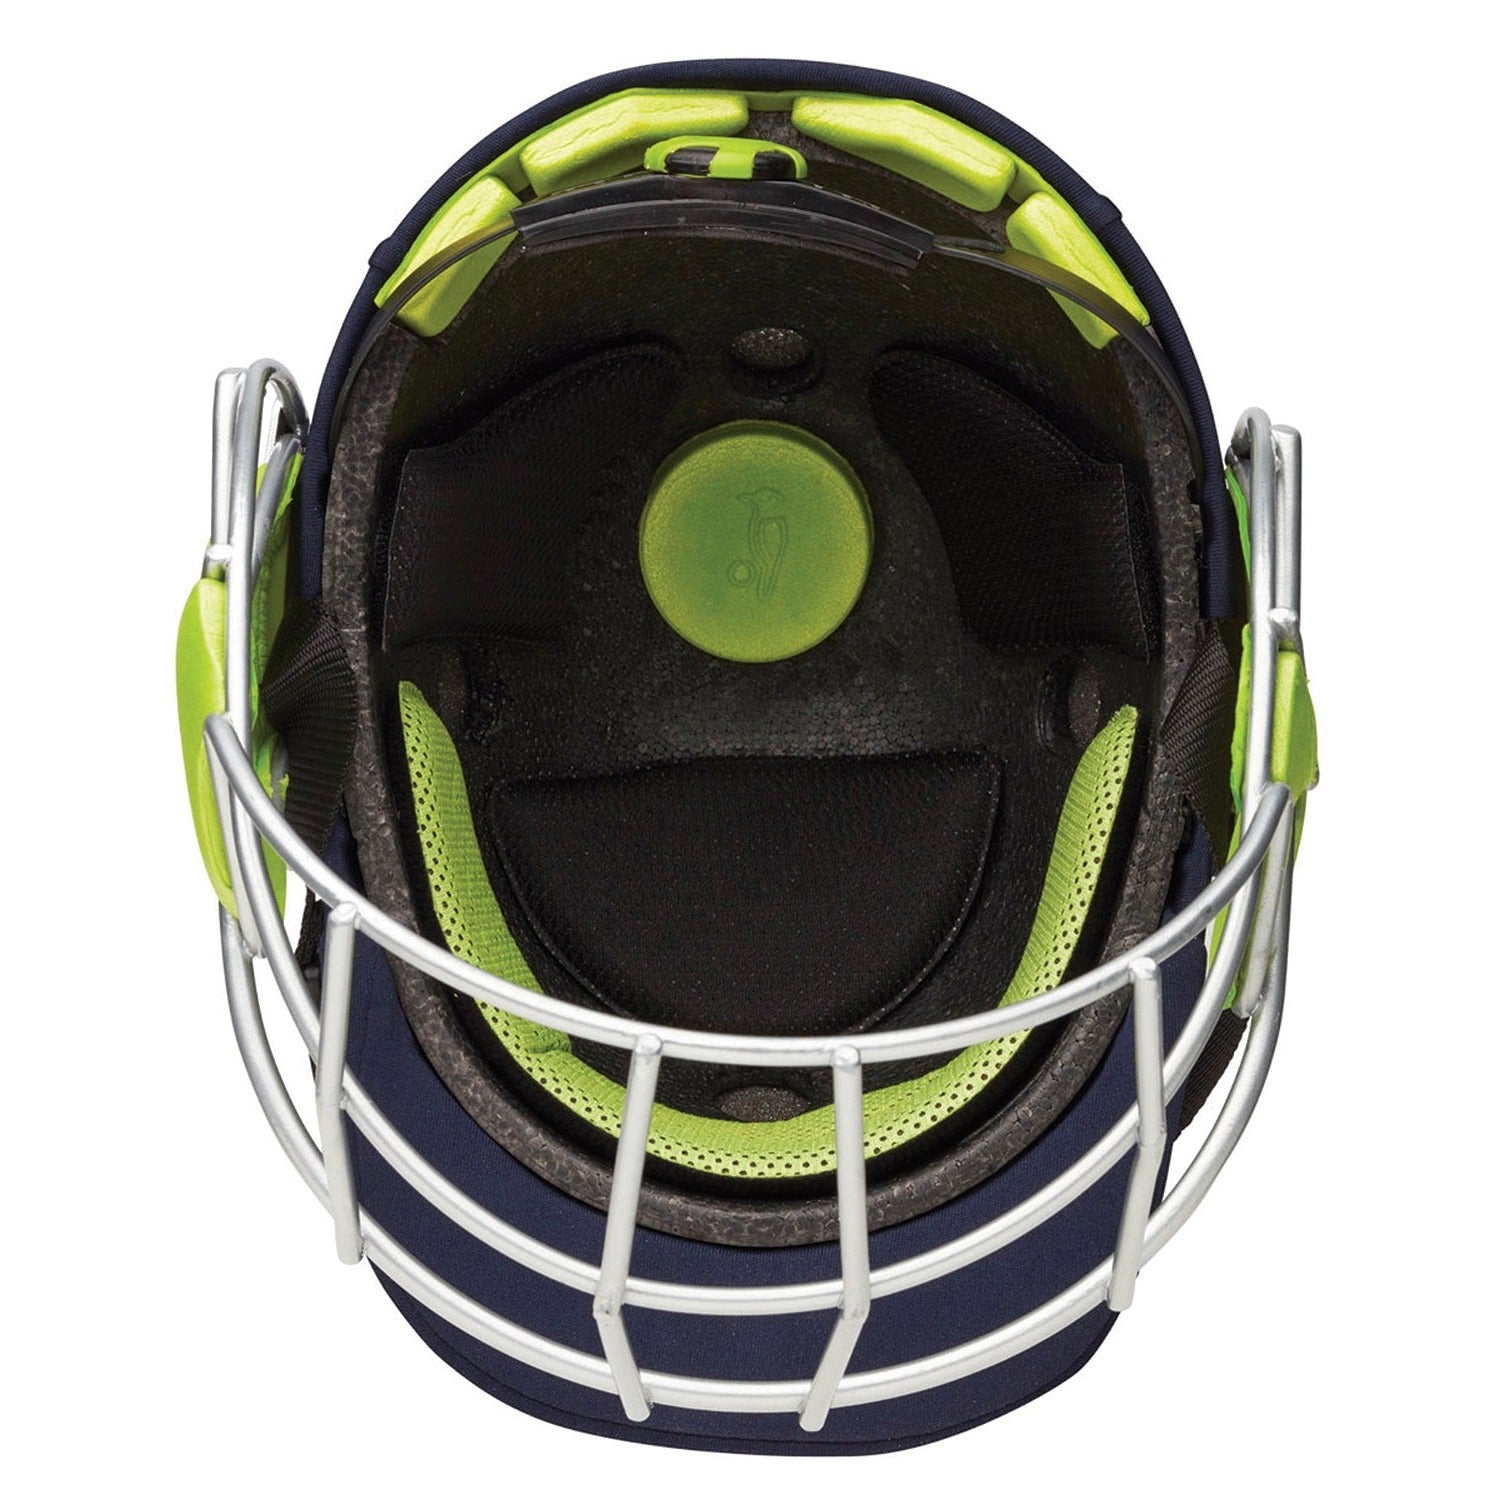 Kookaburra Pro 1500 Titanium Cricket Helmet Navy